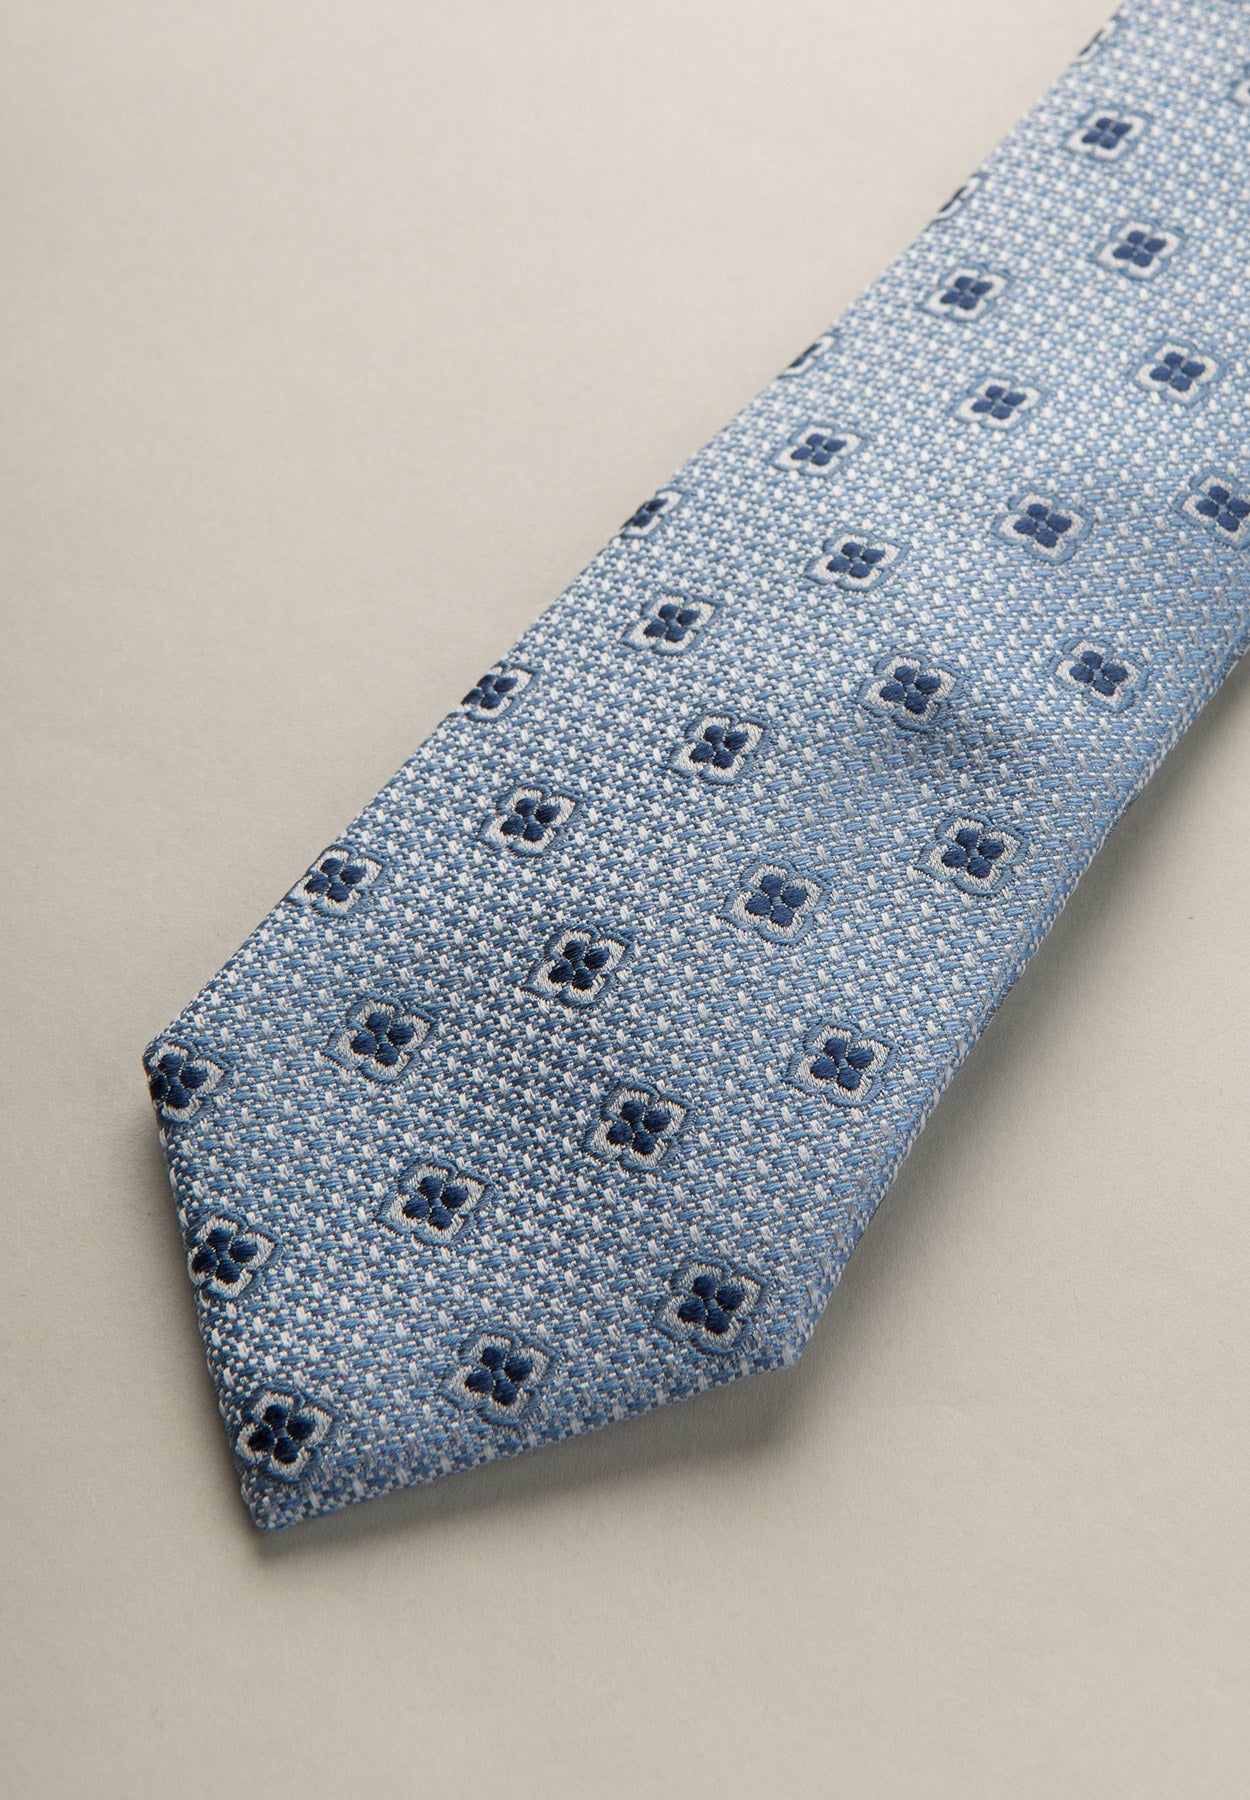 Cravatta azzurra armatura fantasia fiori seta cotone